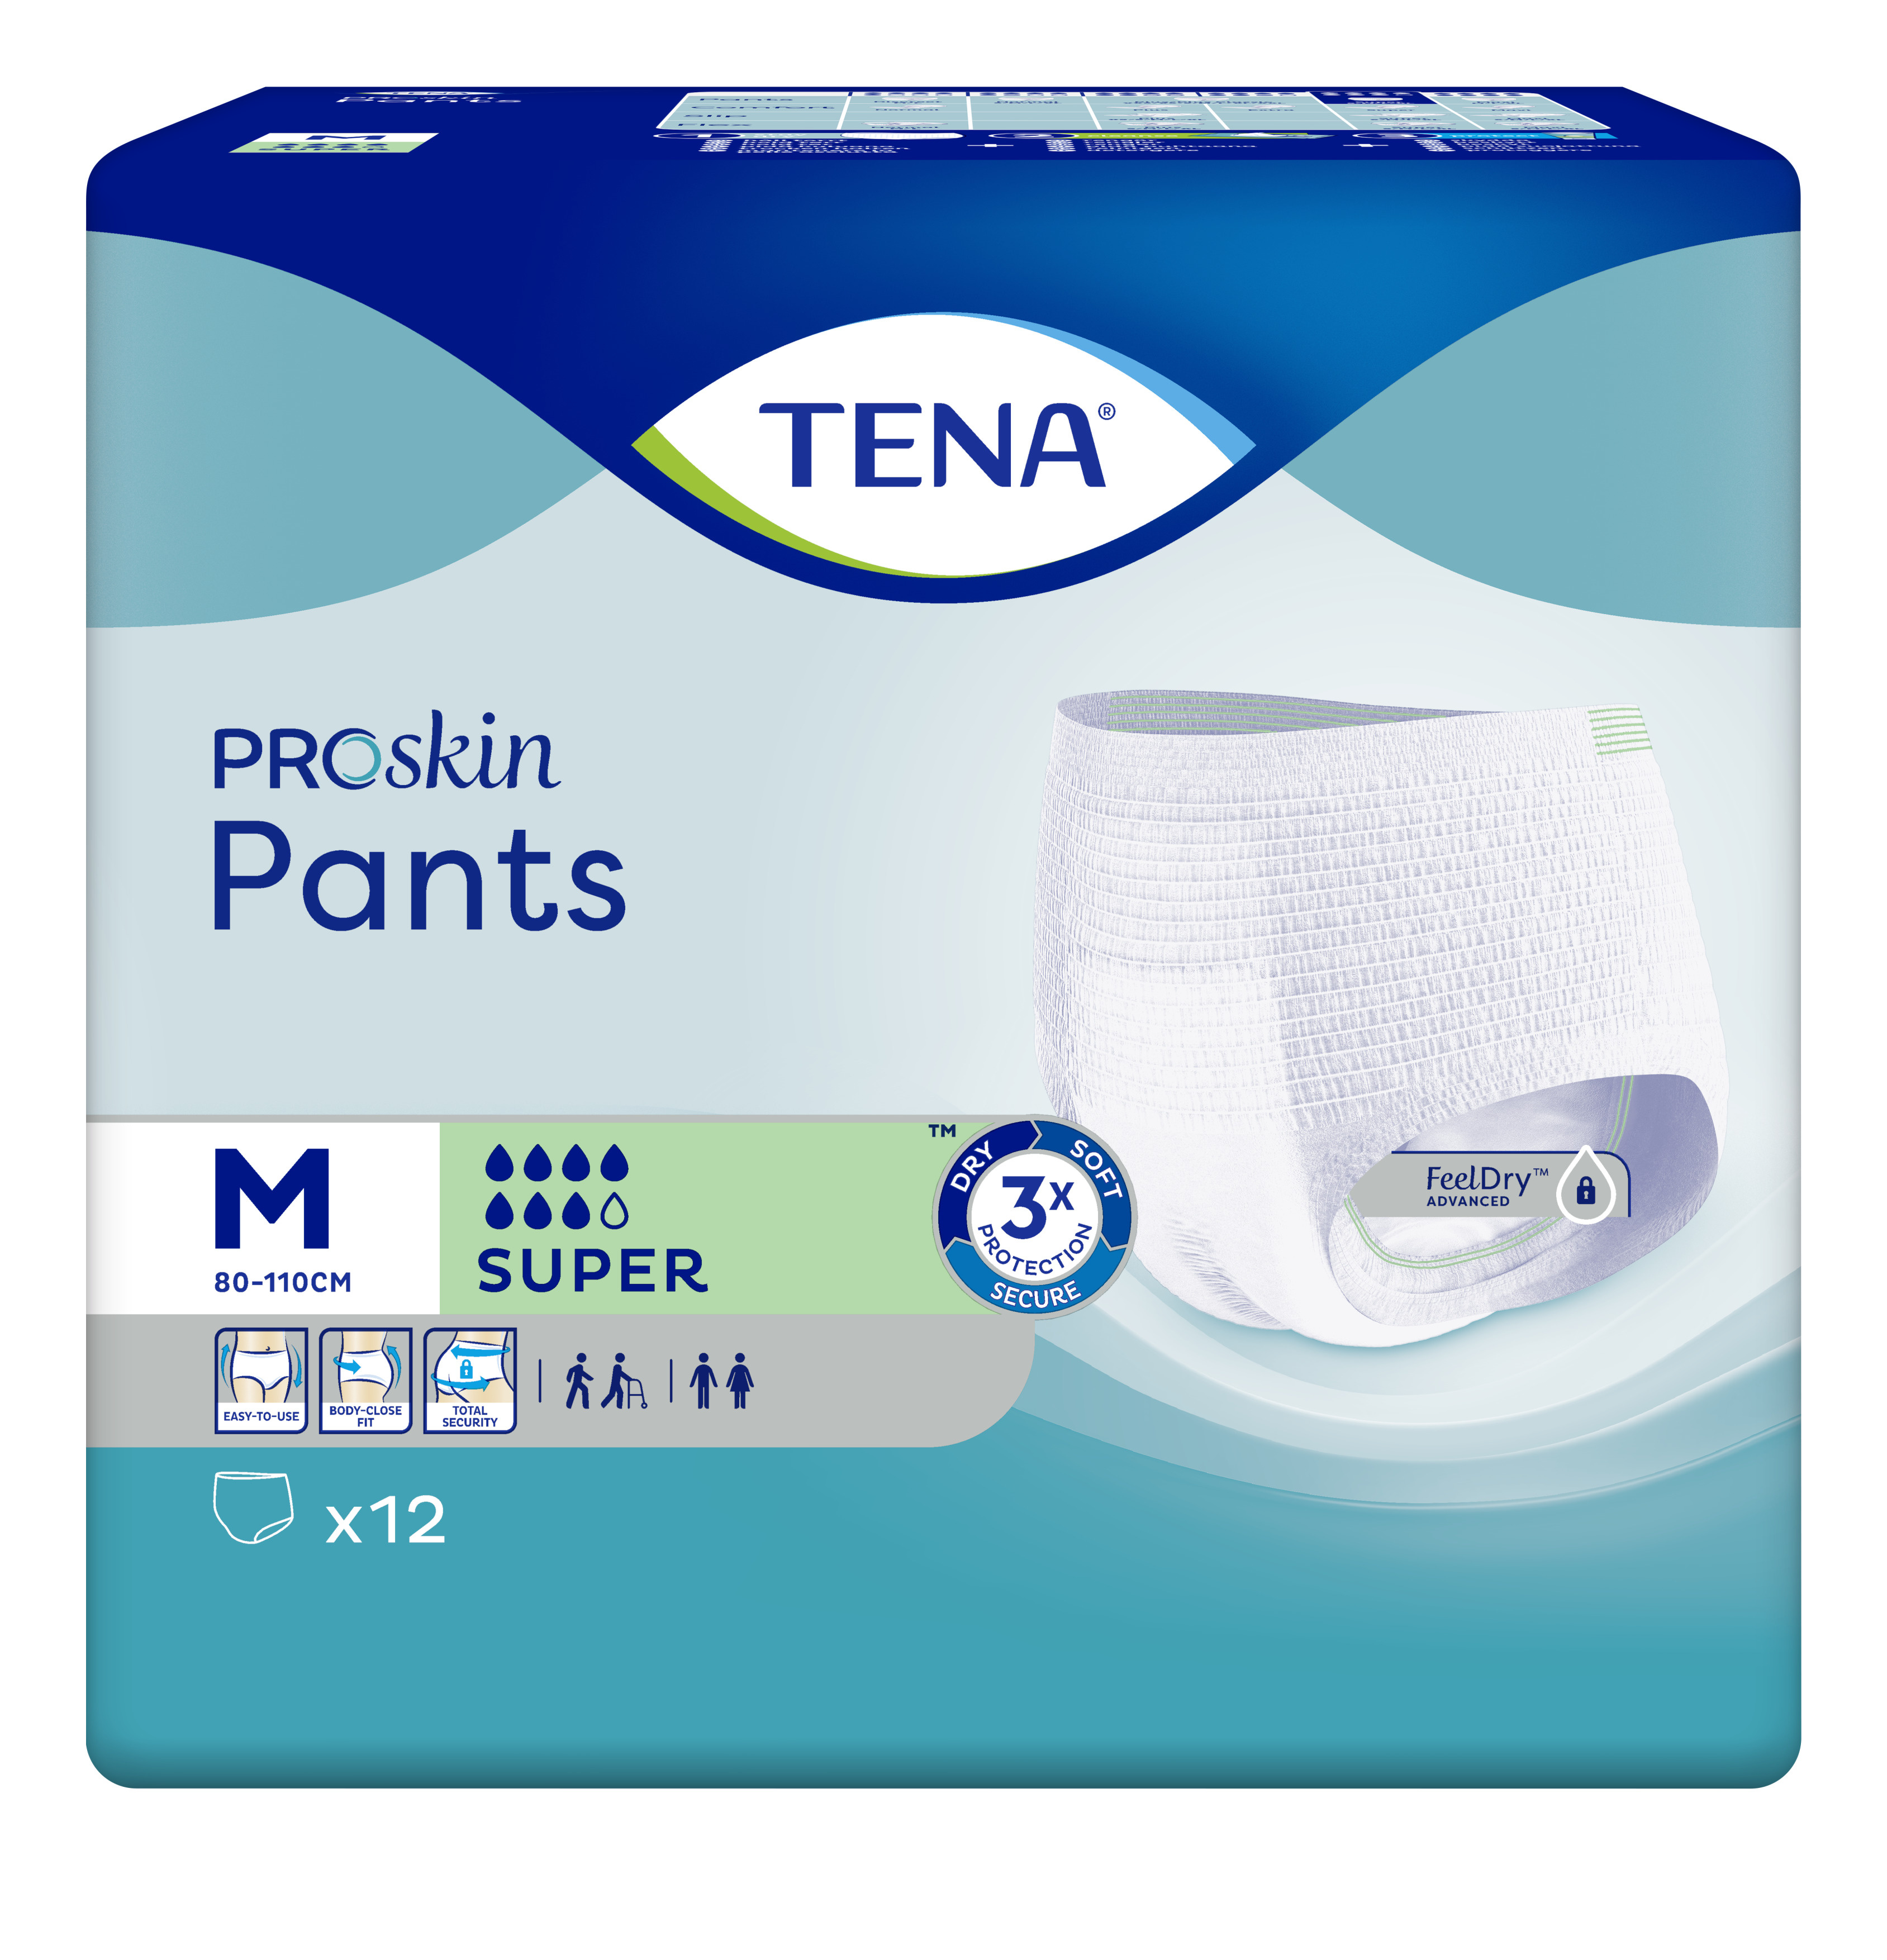 TENA PROskin Pants Super Medium image 0